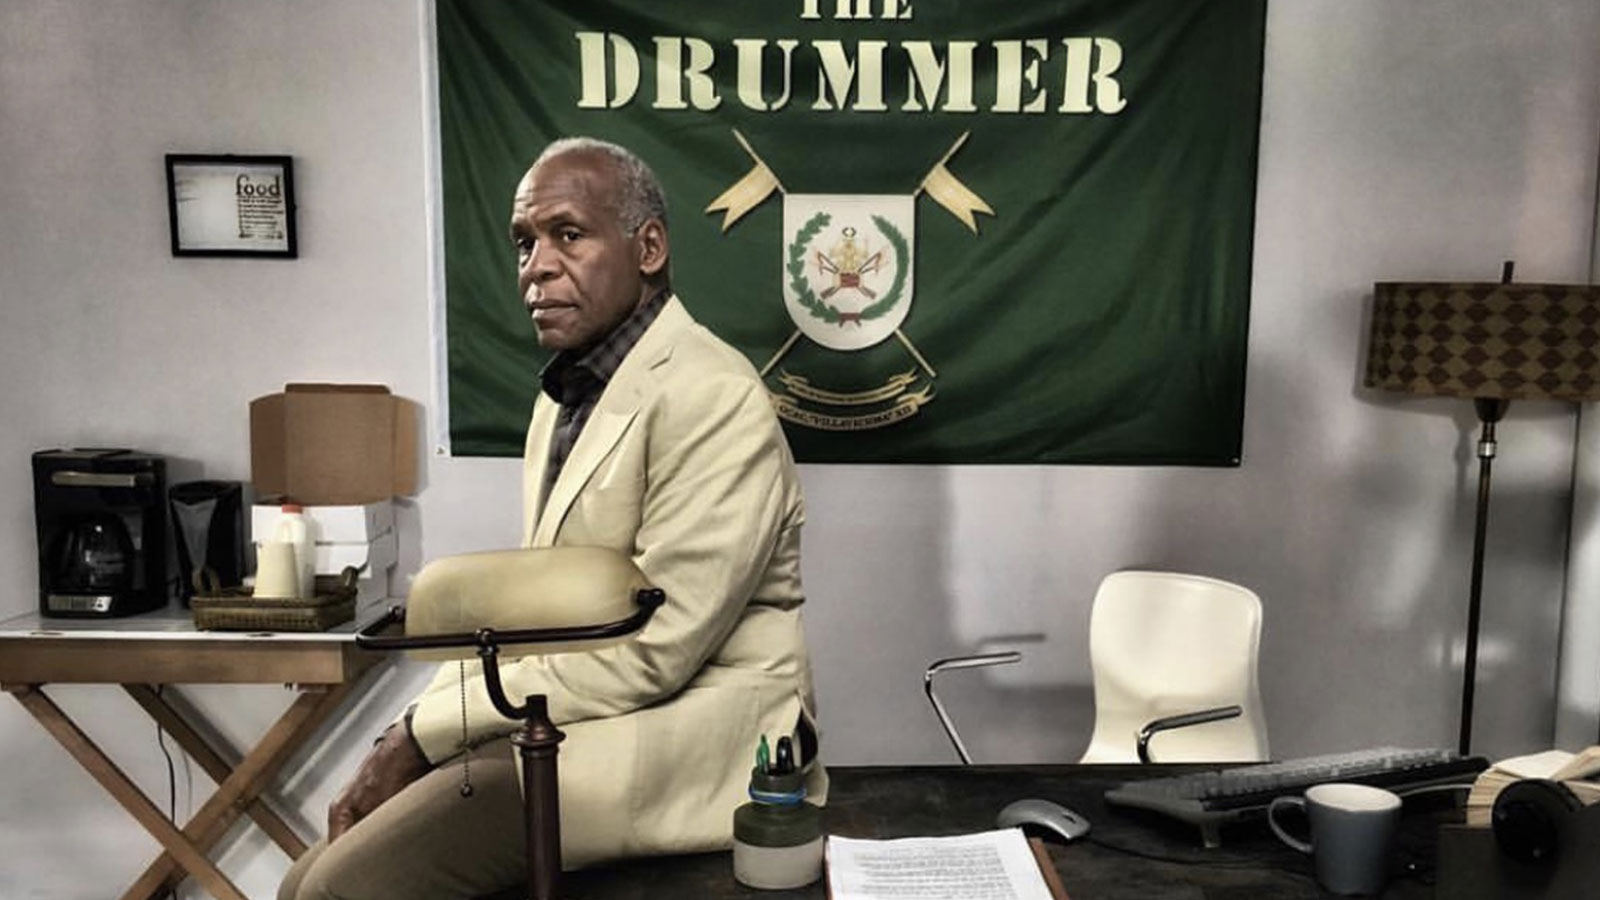 The Drummer starring Danny Glover